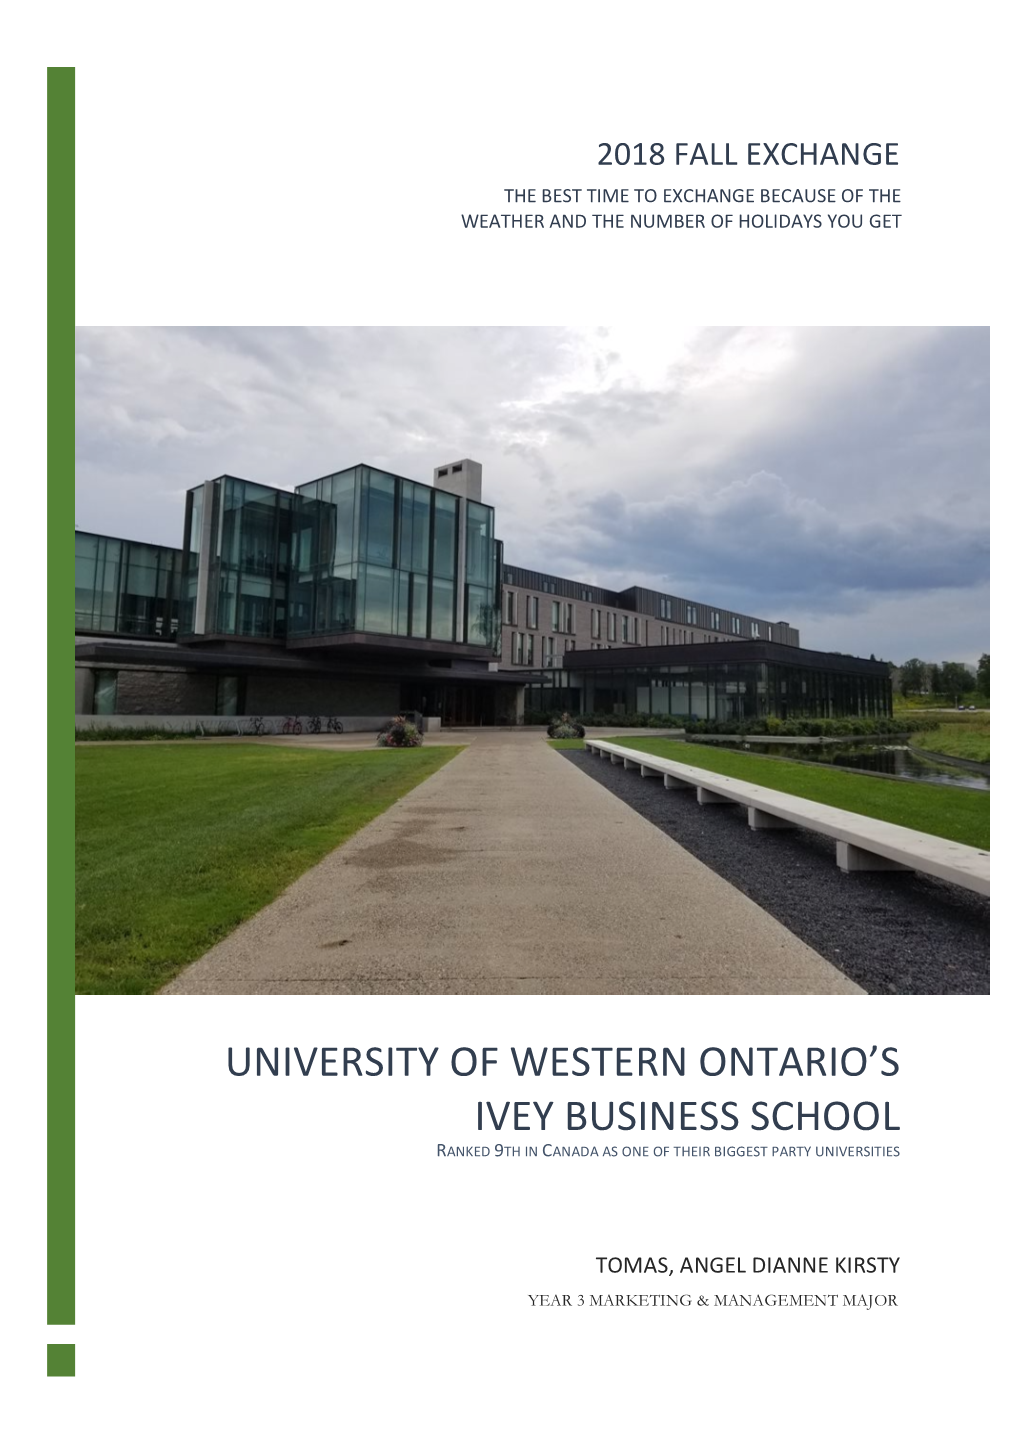 University of Western Ontario's Ivey Business